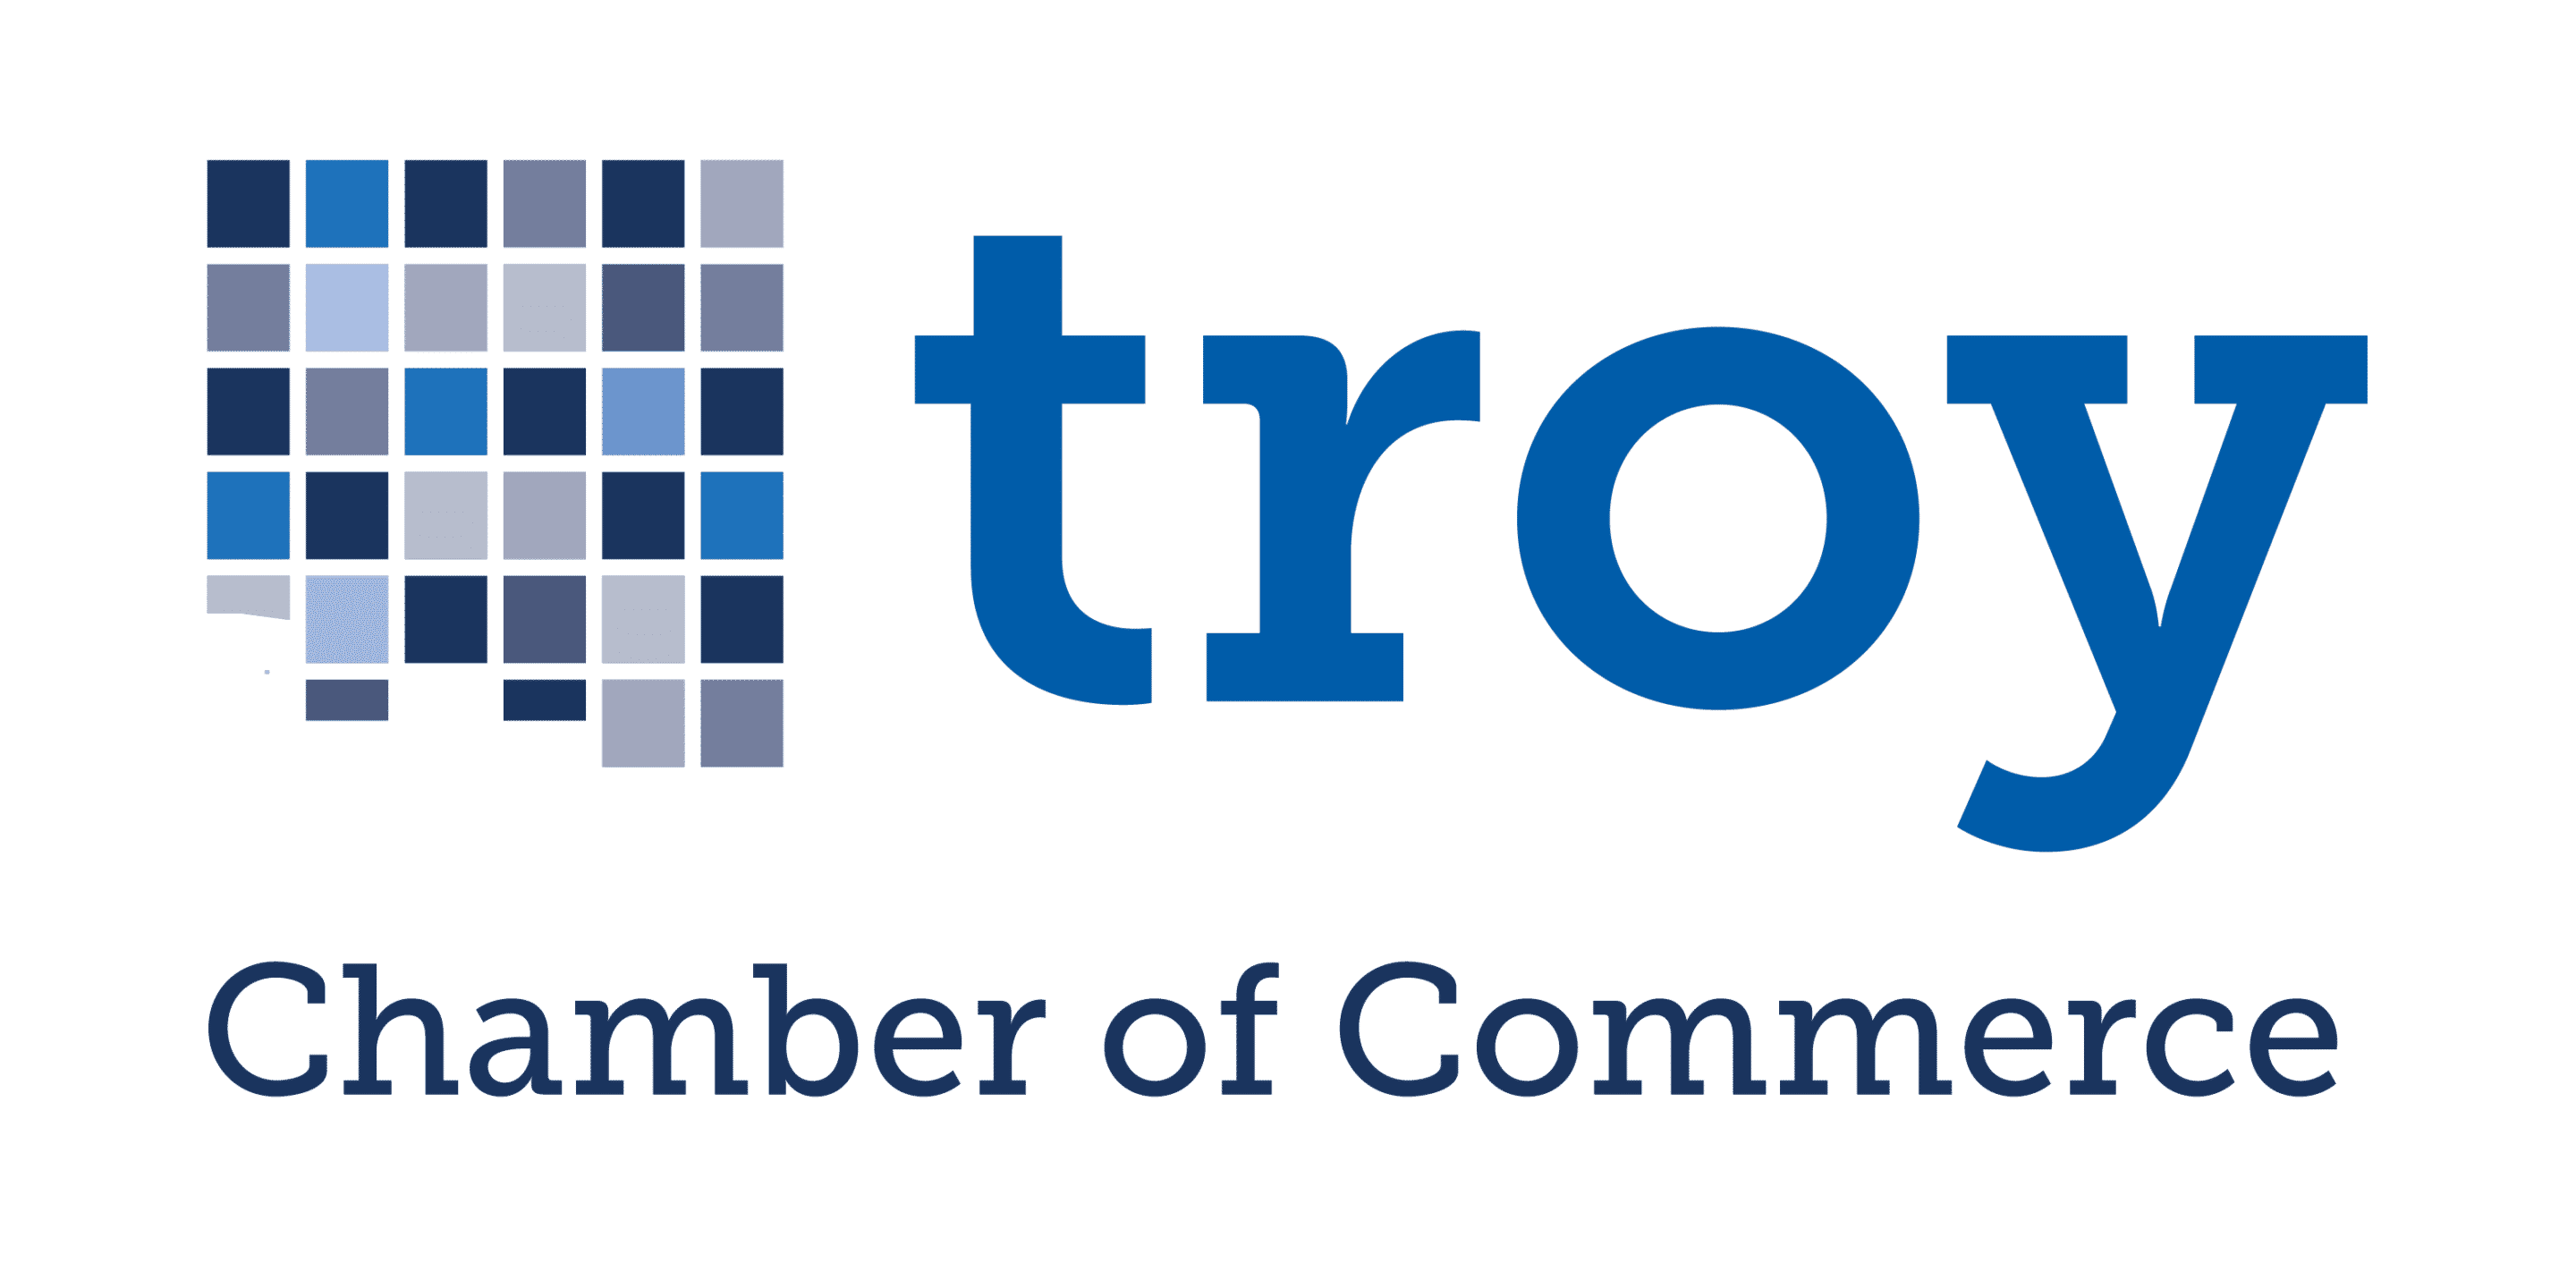 troy chamber of commerce logo